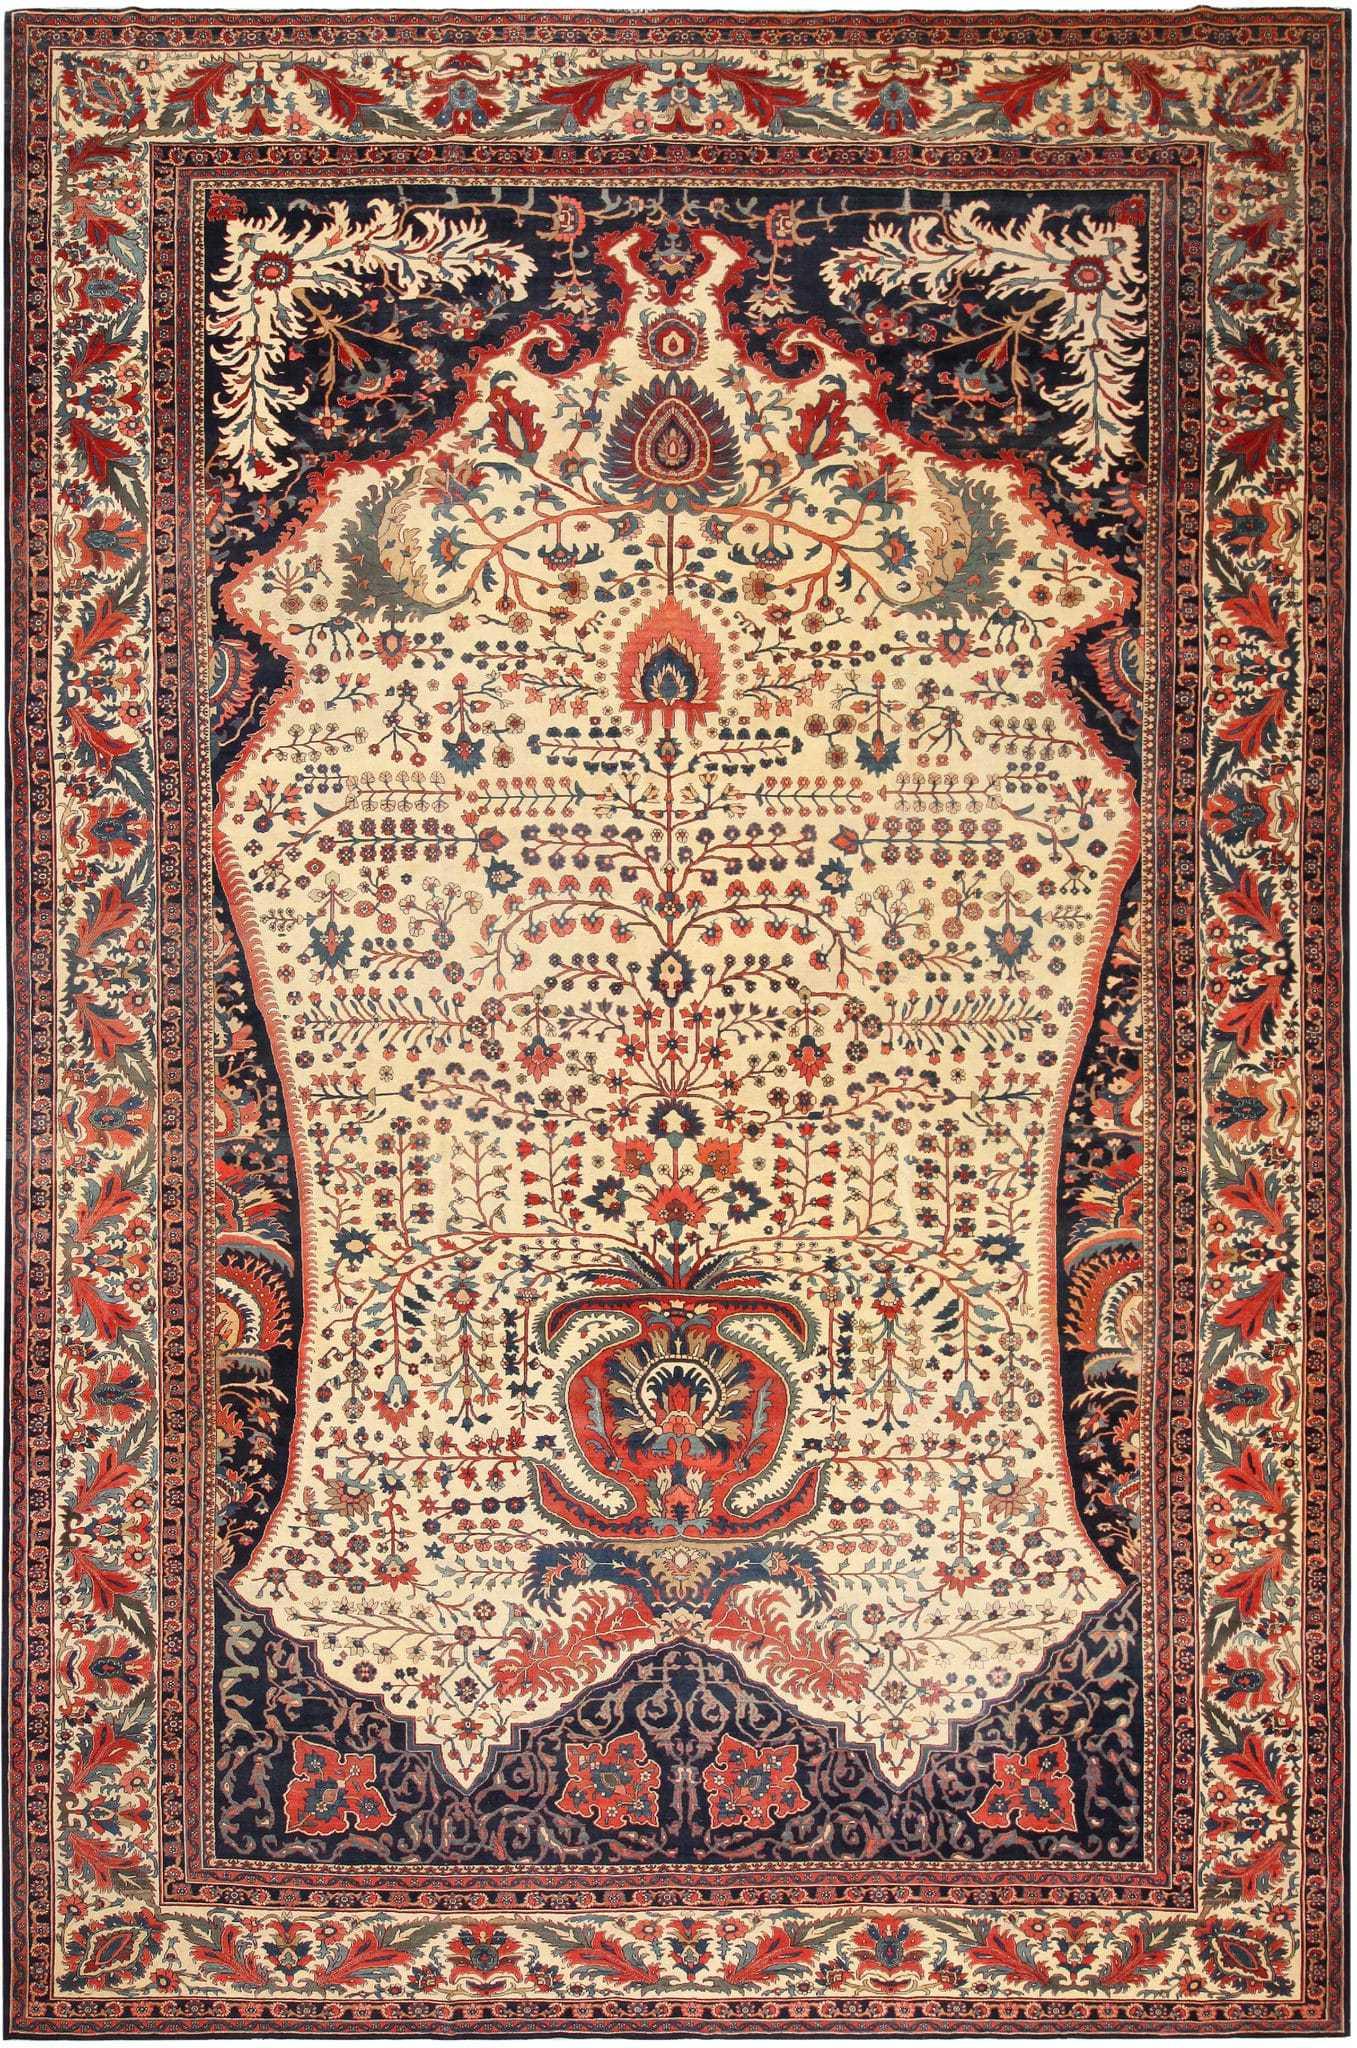 vase pattern in handwoven carpet